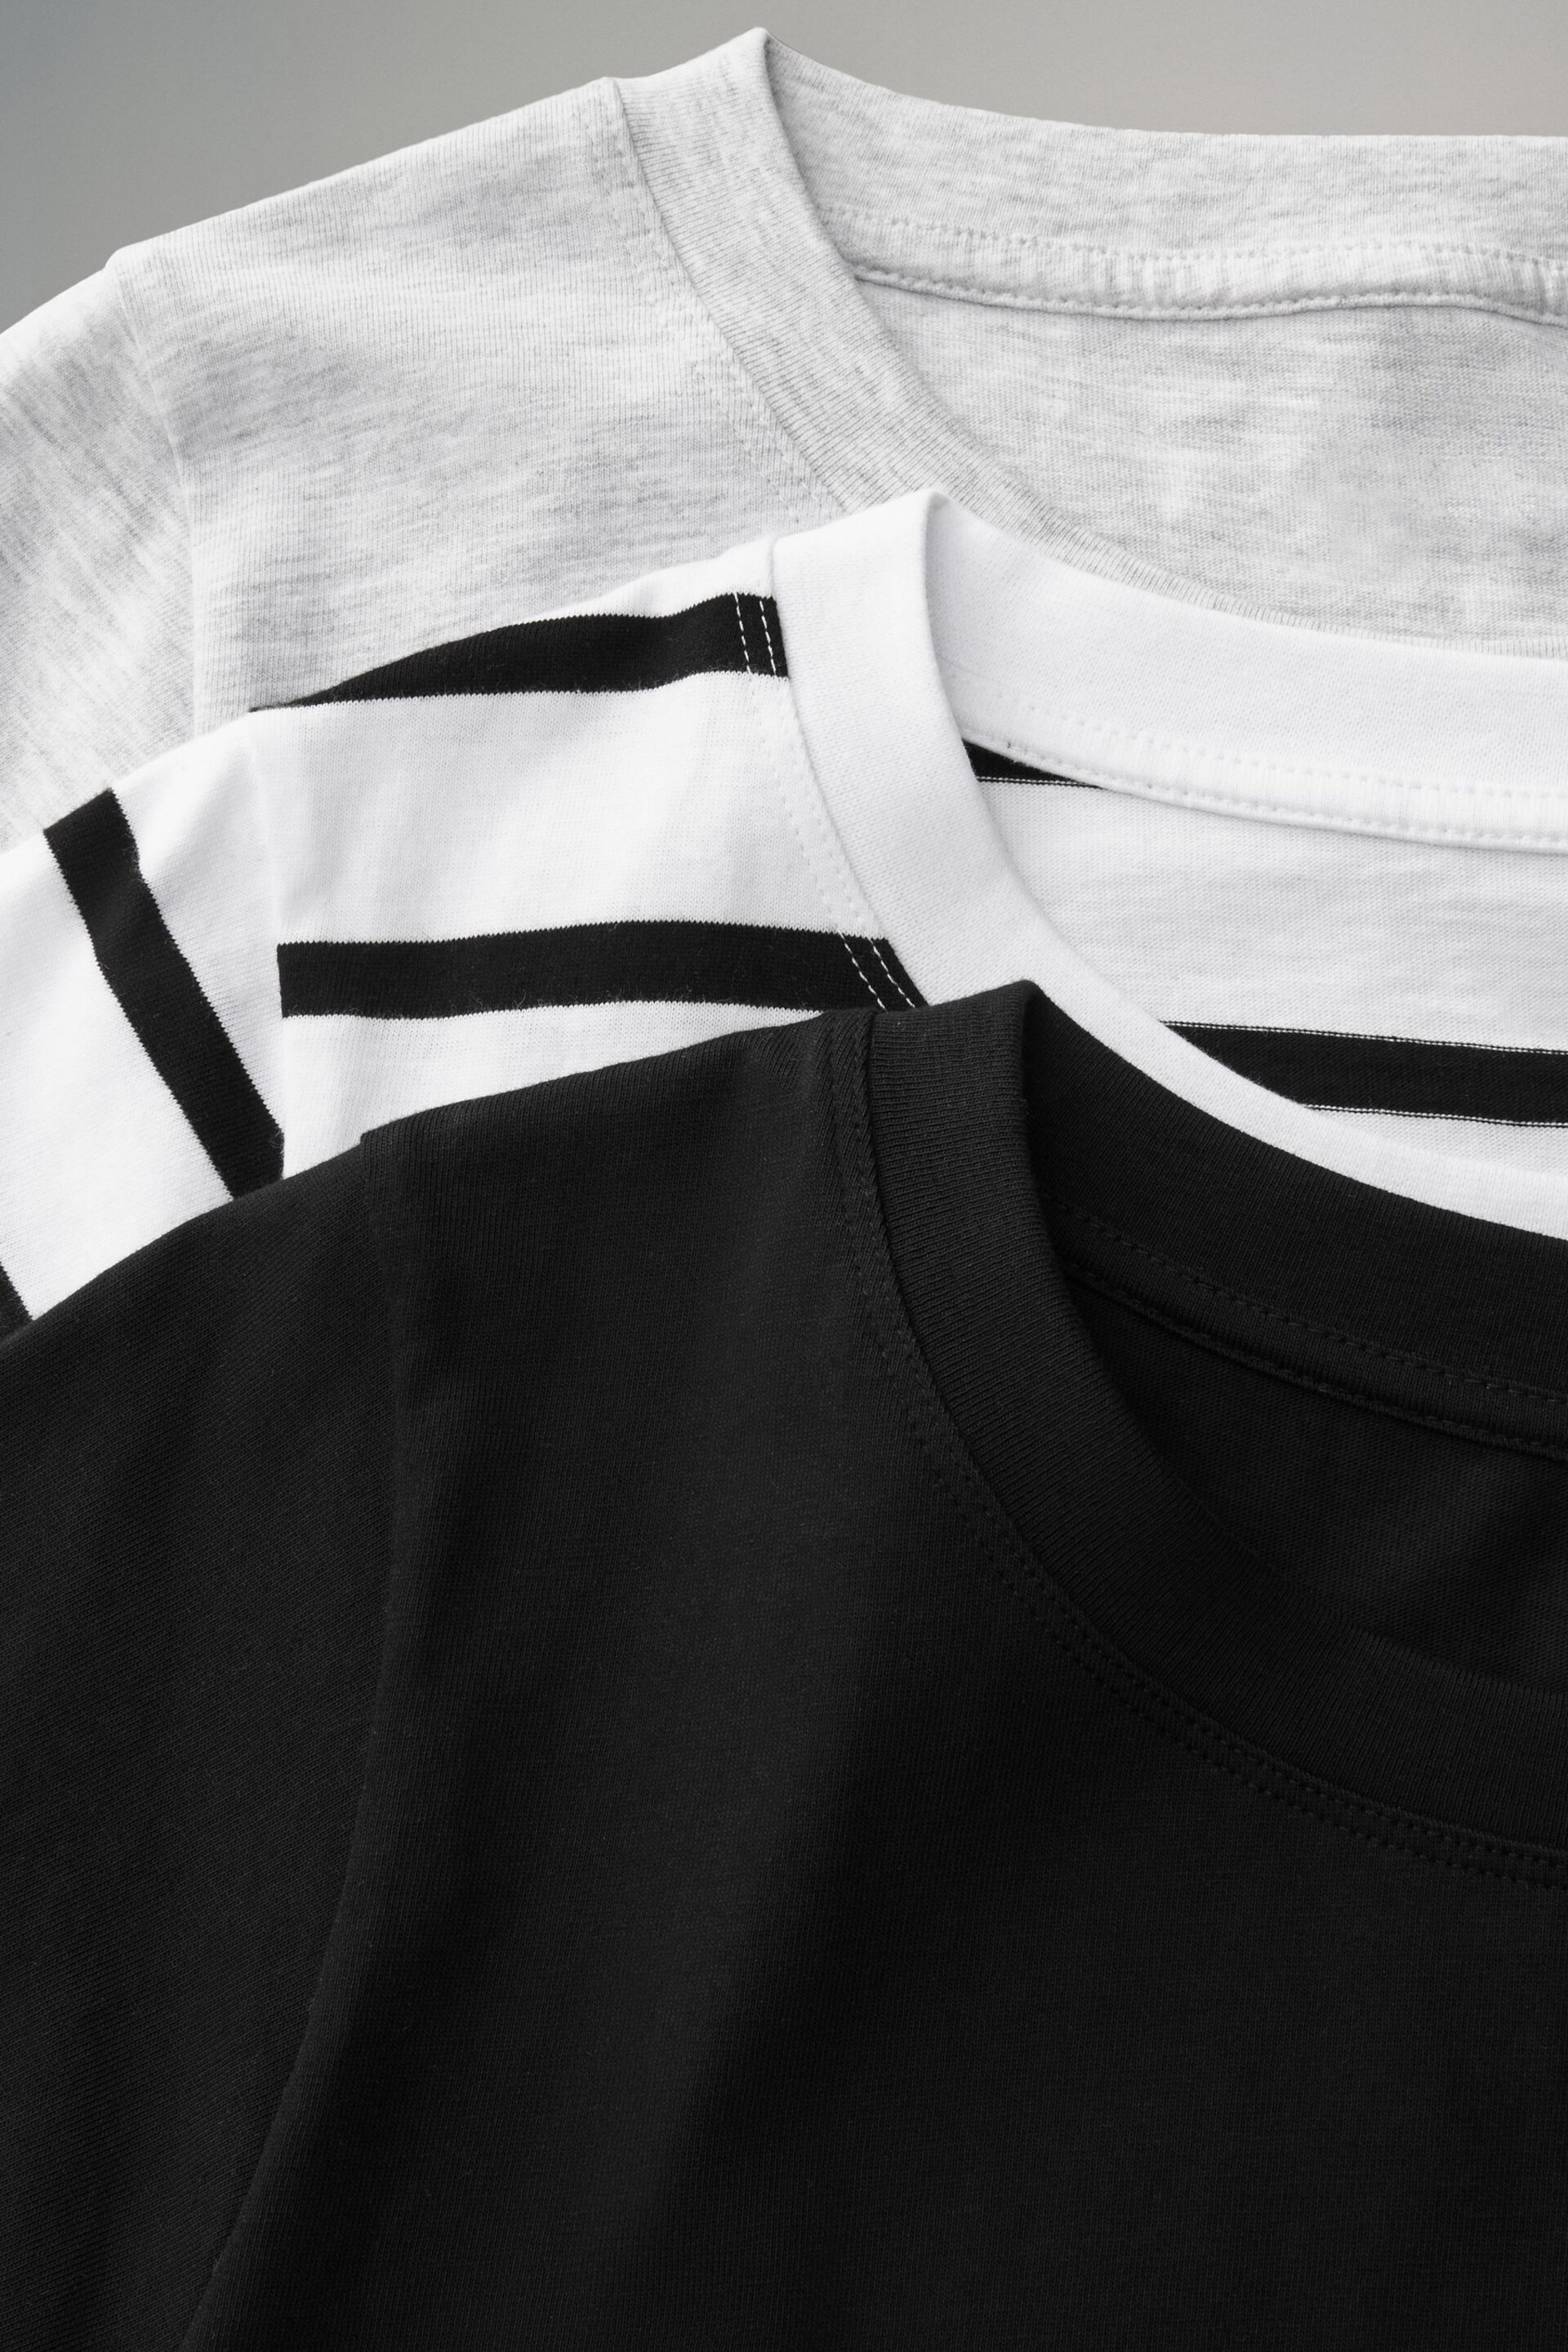 The Set Black/Grey/White Stripe Short Sleeve T-Shirt Dress 3 Pack - Image 8 of 8